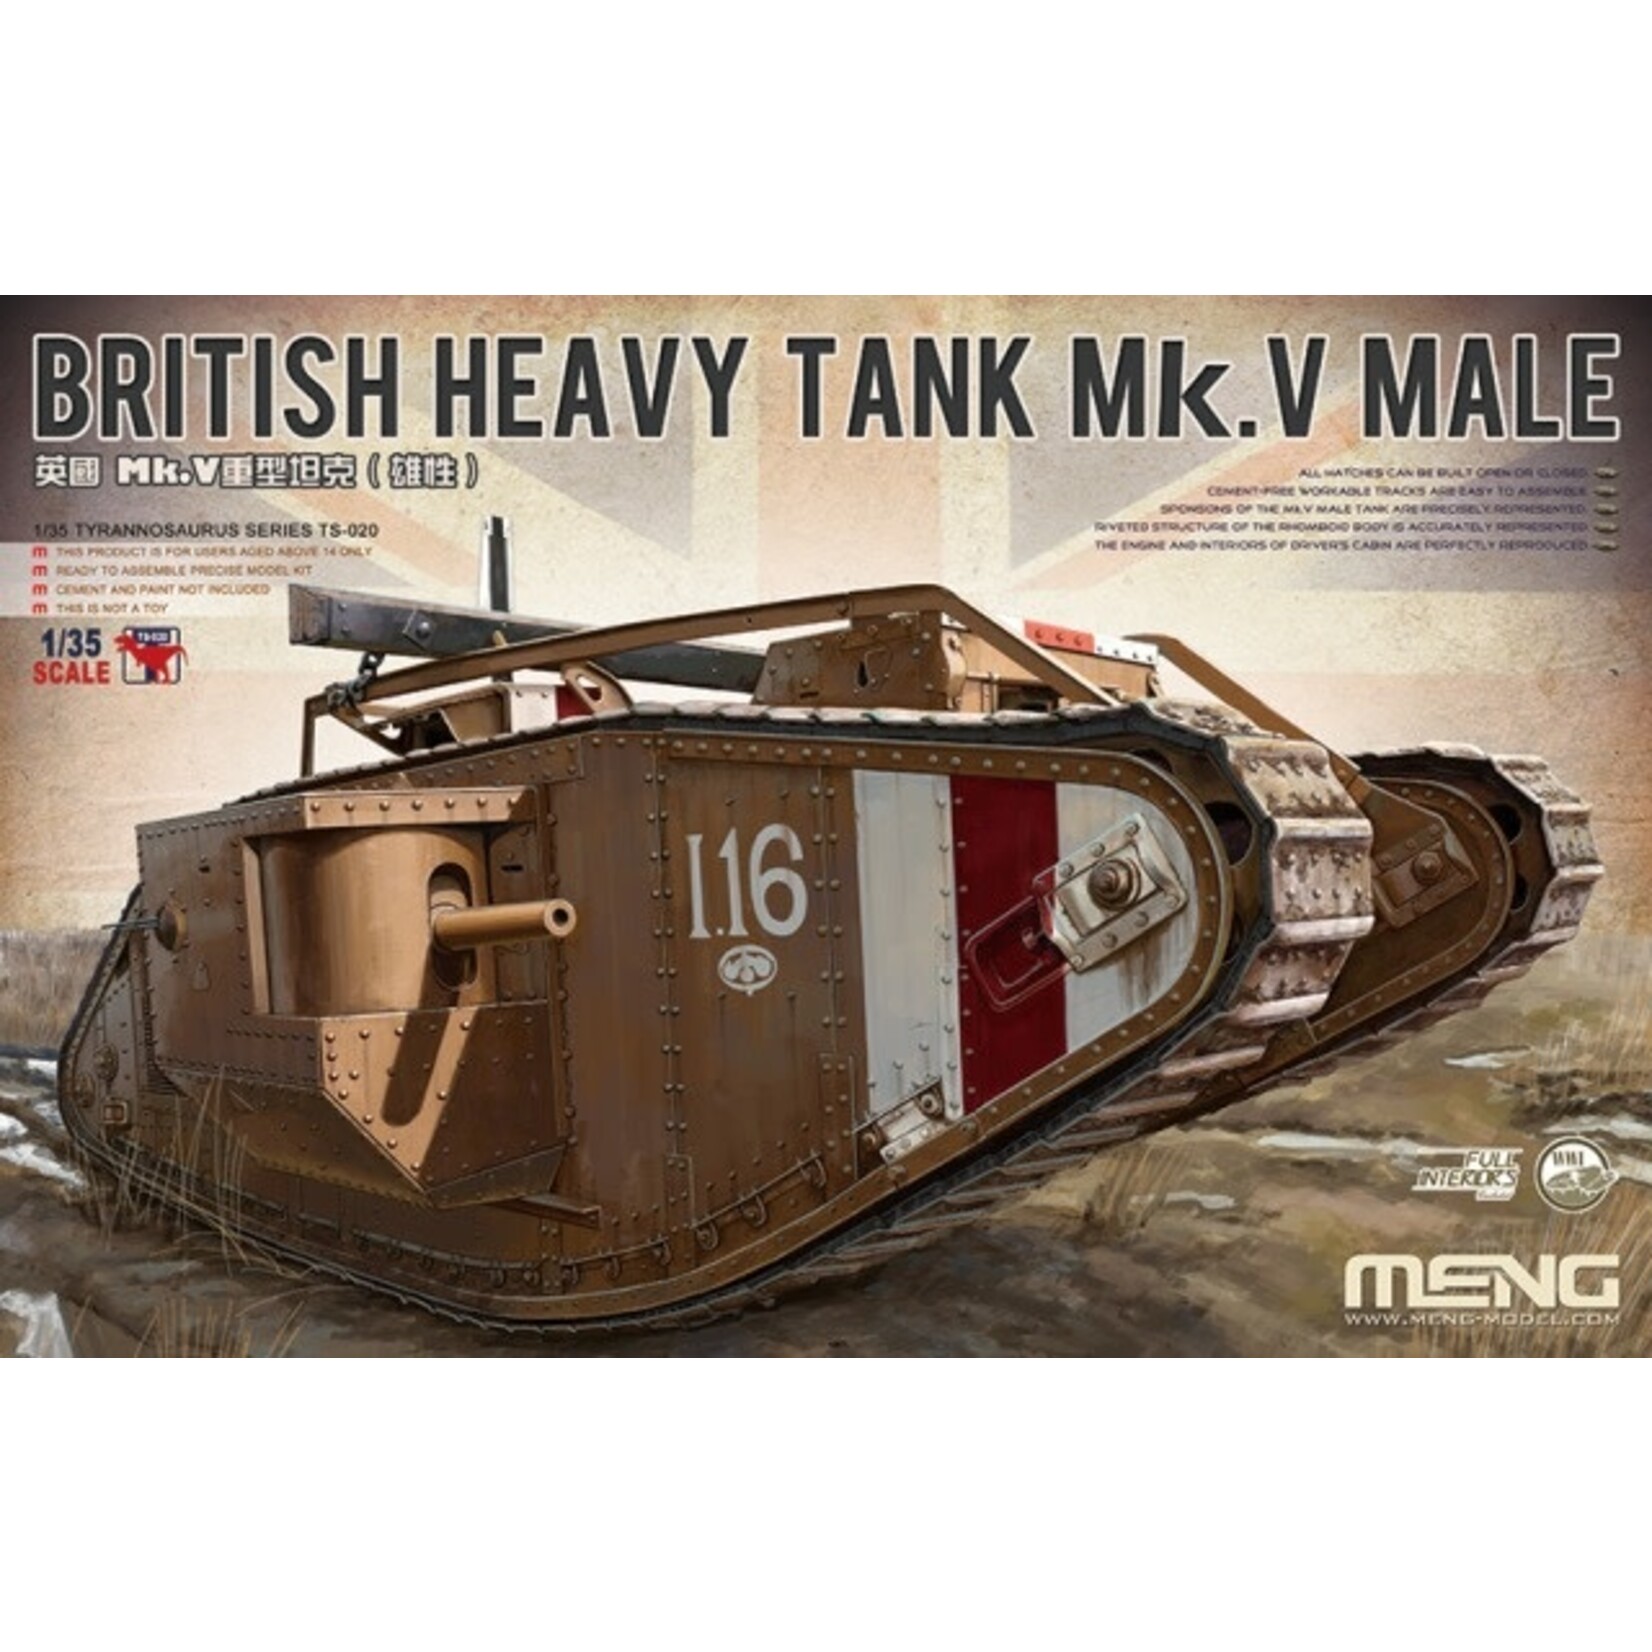 MENG MENGTS020 British Heavy Tank Mk.V Male (1/35)